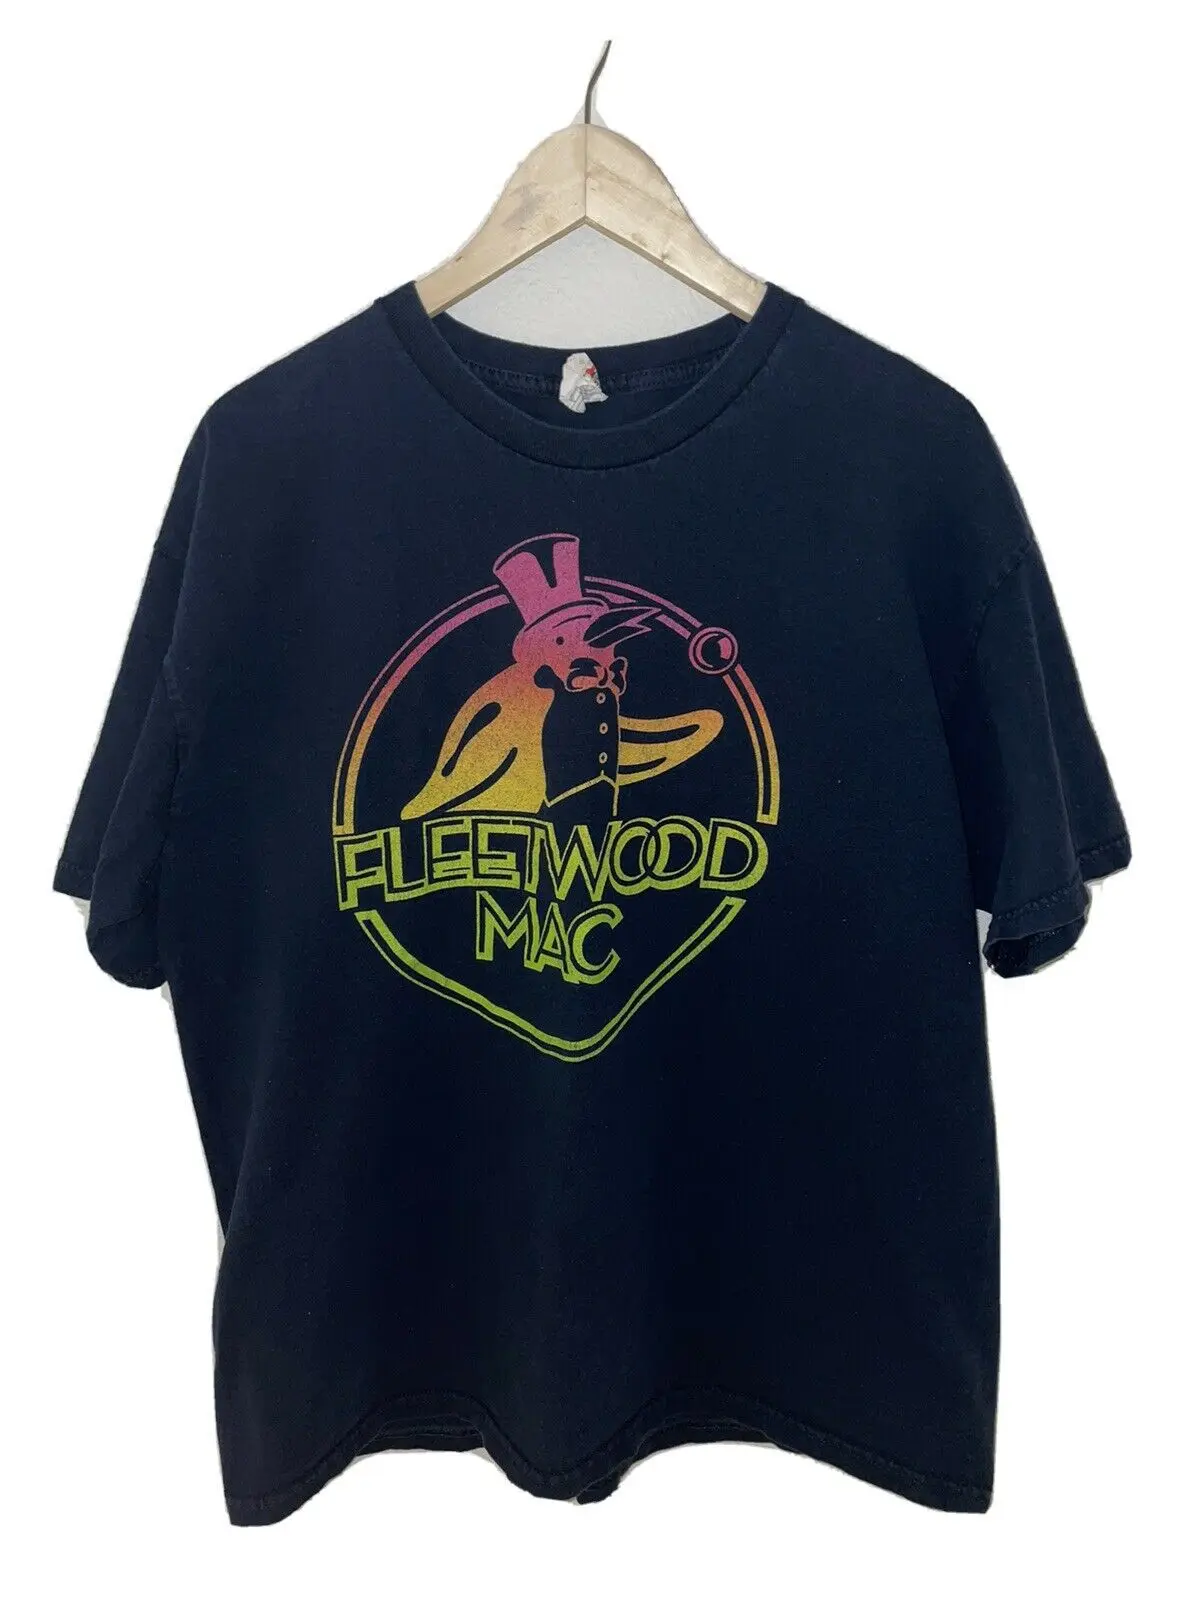 Фото Голубая рубашка Fleetwood Mac World Tour 2014 2015 размер XL|Мужские футболки| |